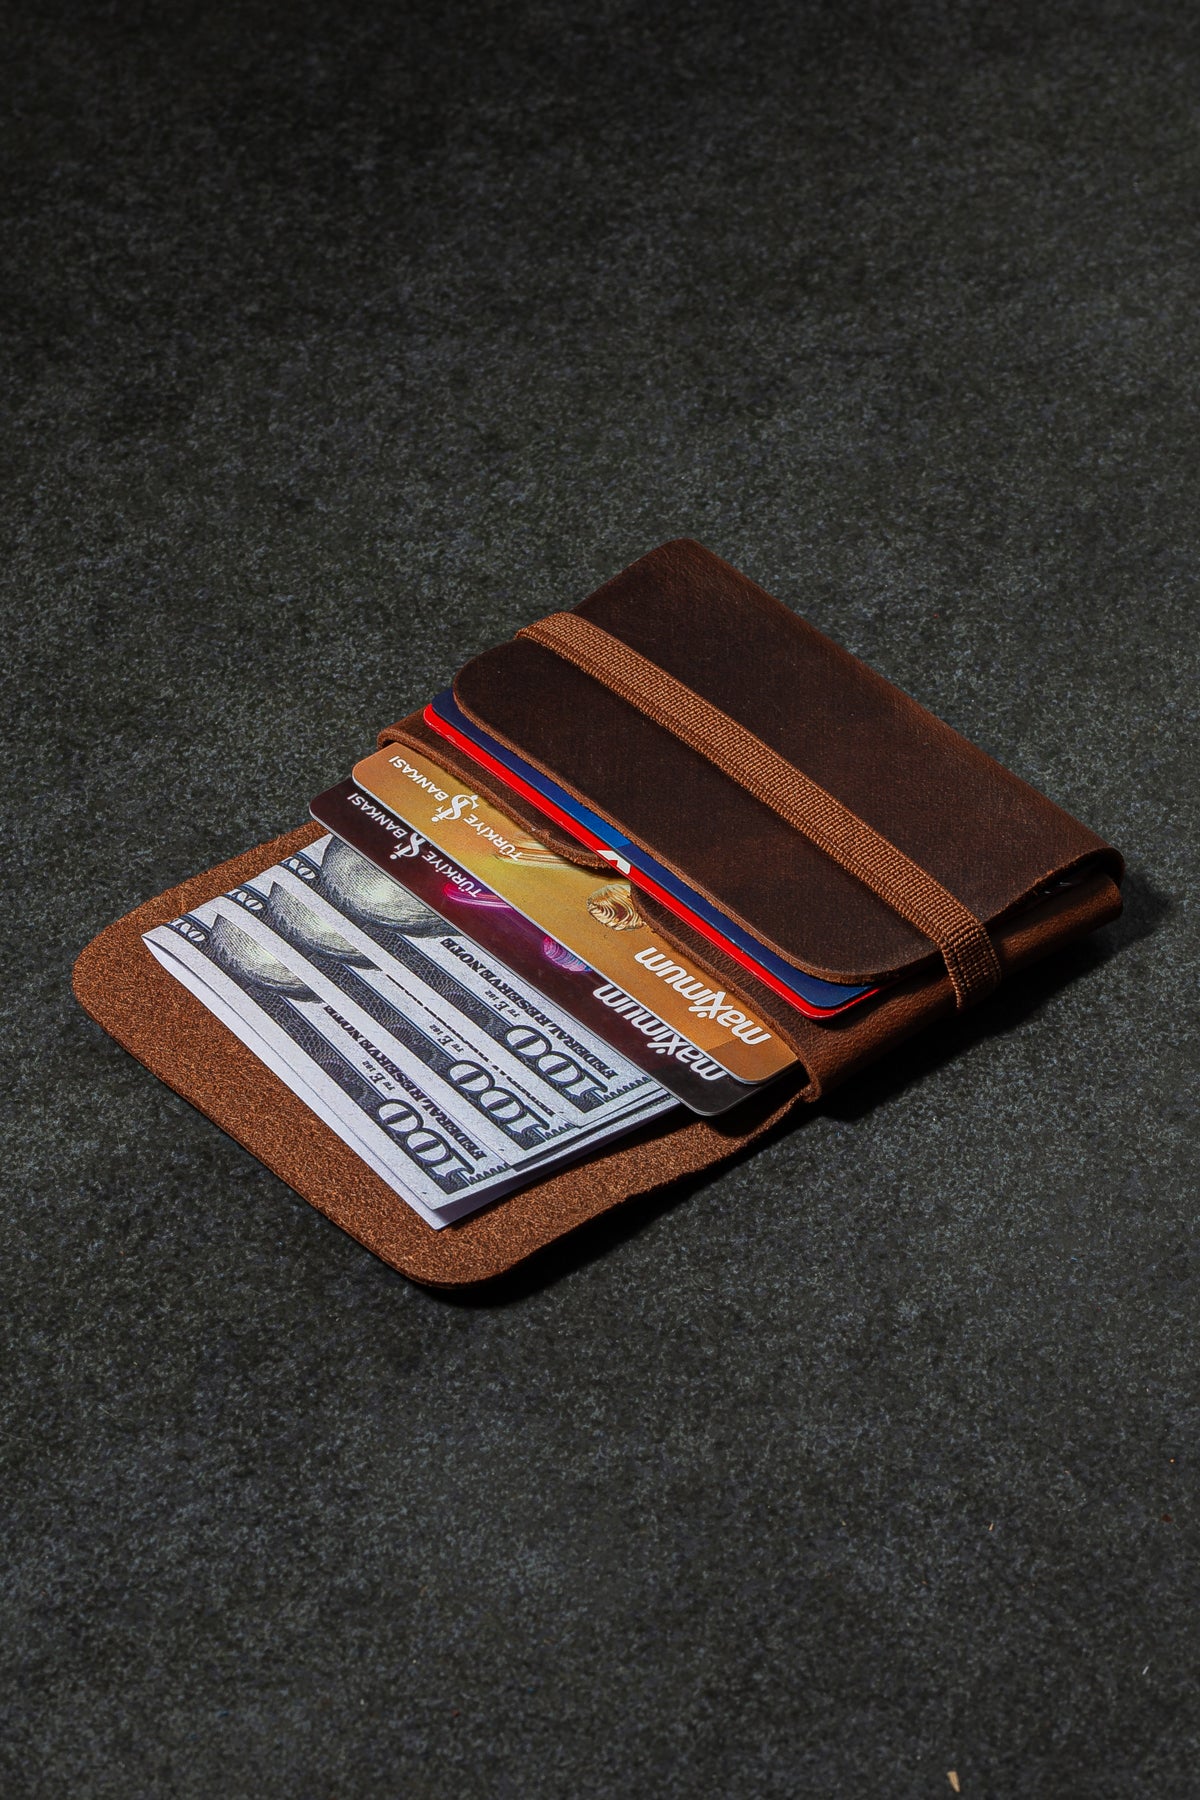 Niki Leather Star Unisex Wallet Card Holder Crazy Leather